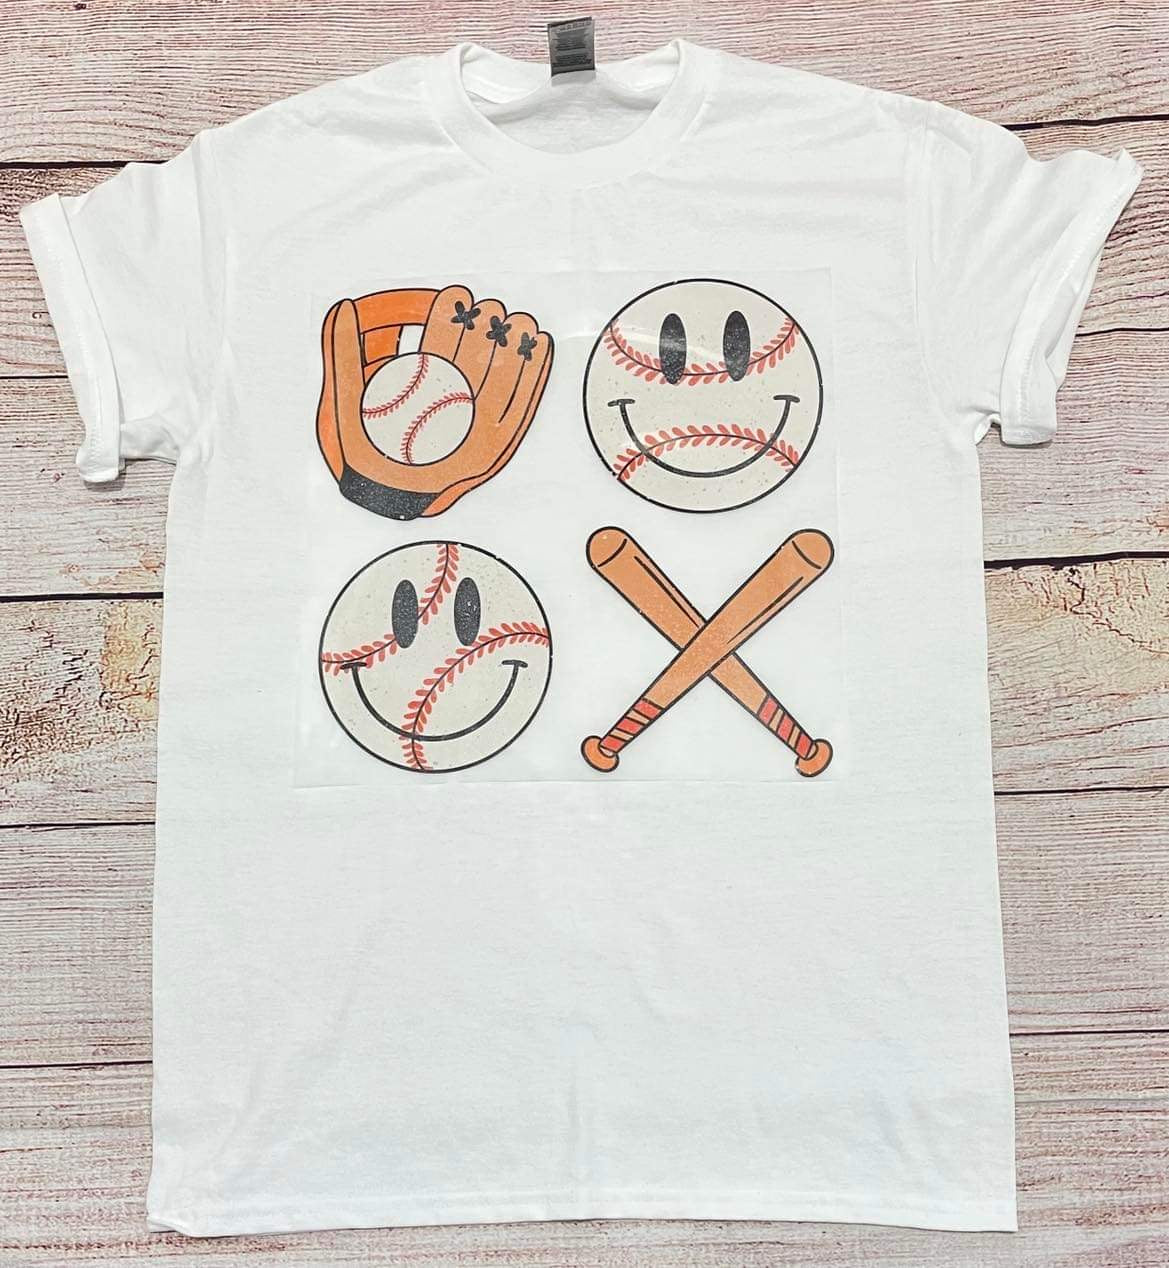 Retro Baseball smiles, gloves and bat T-shirt